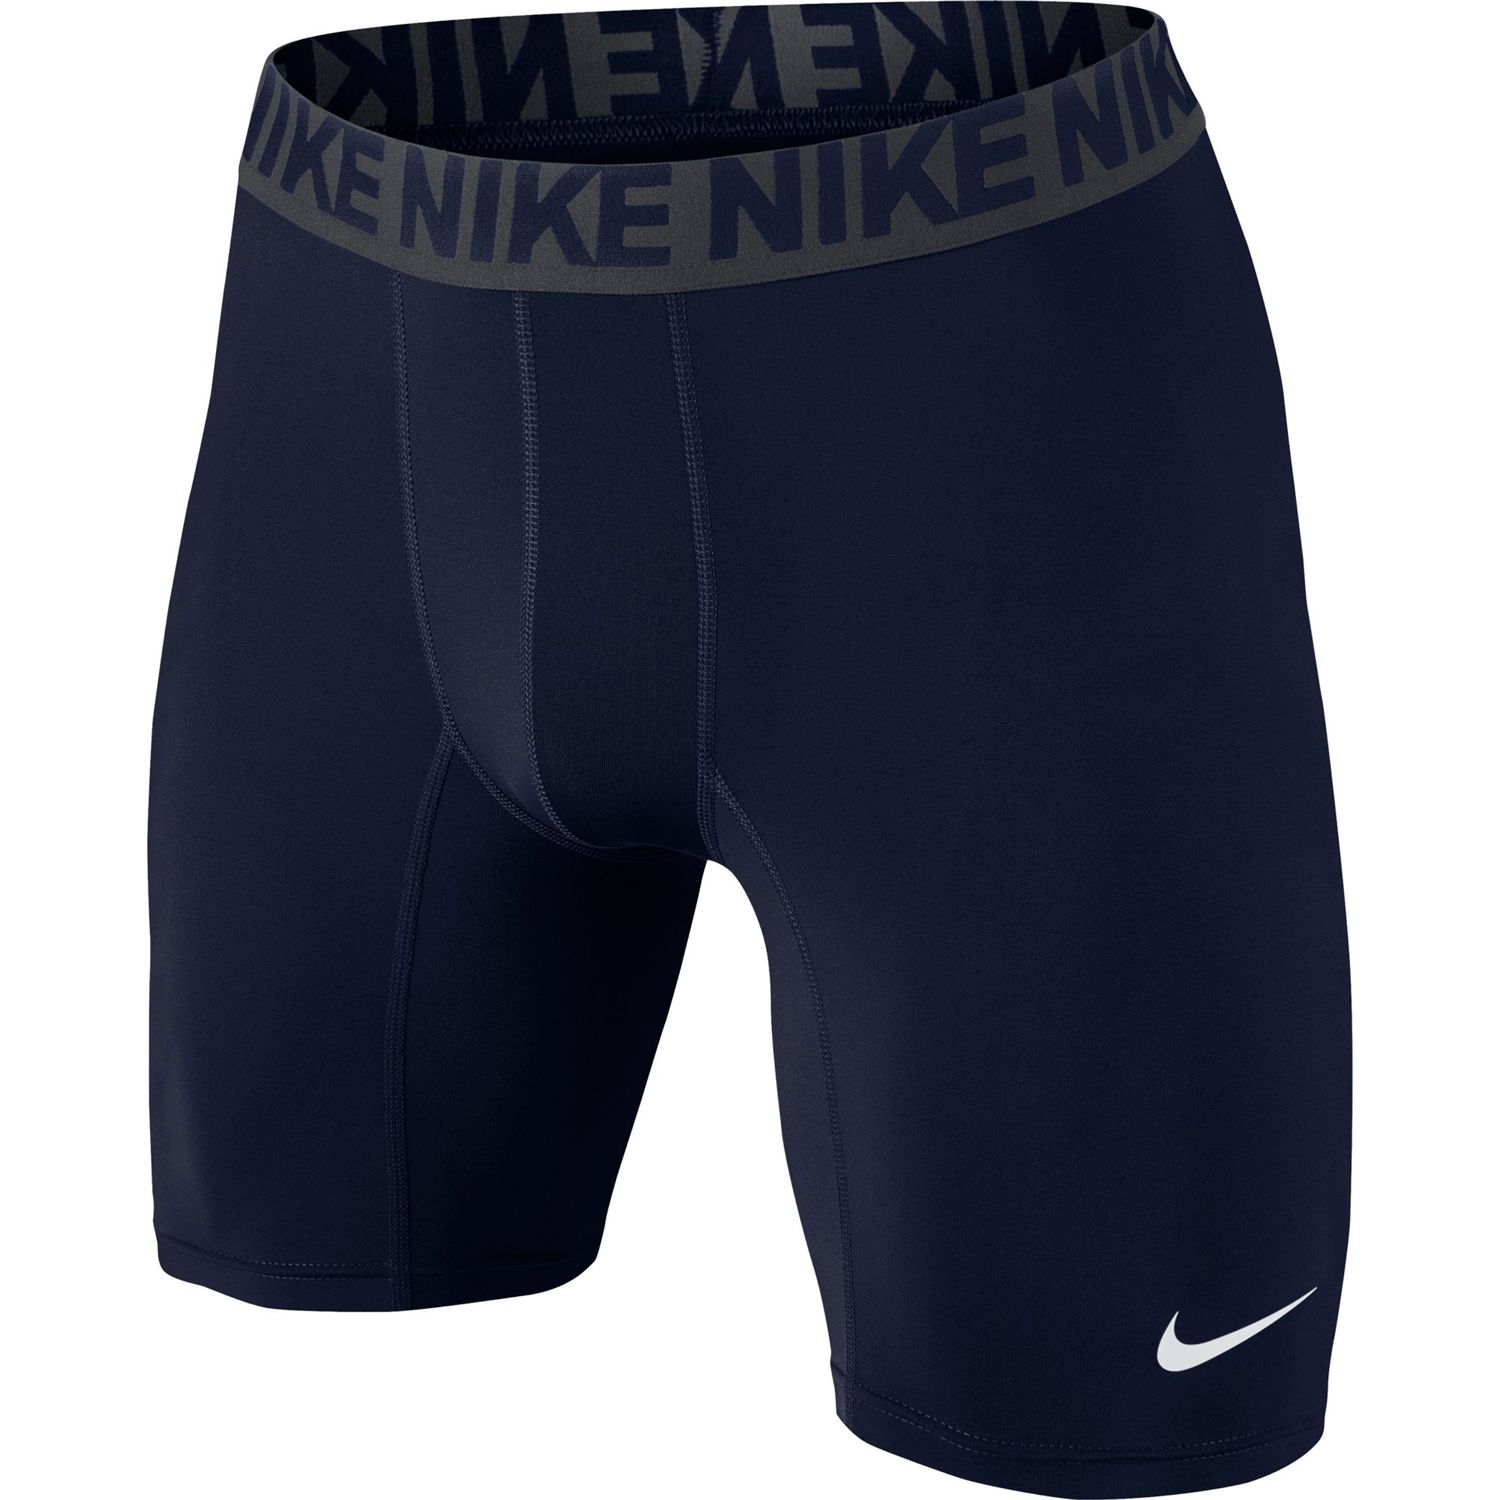 nike compression shorts men